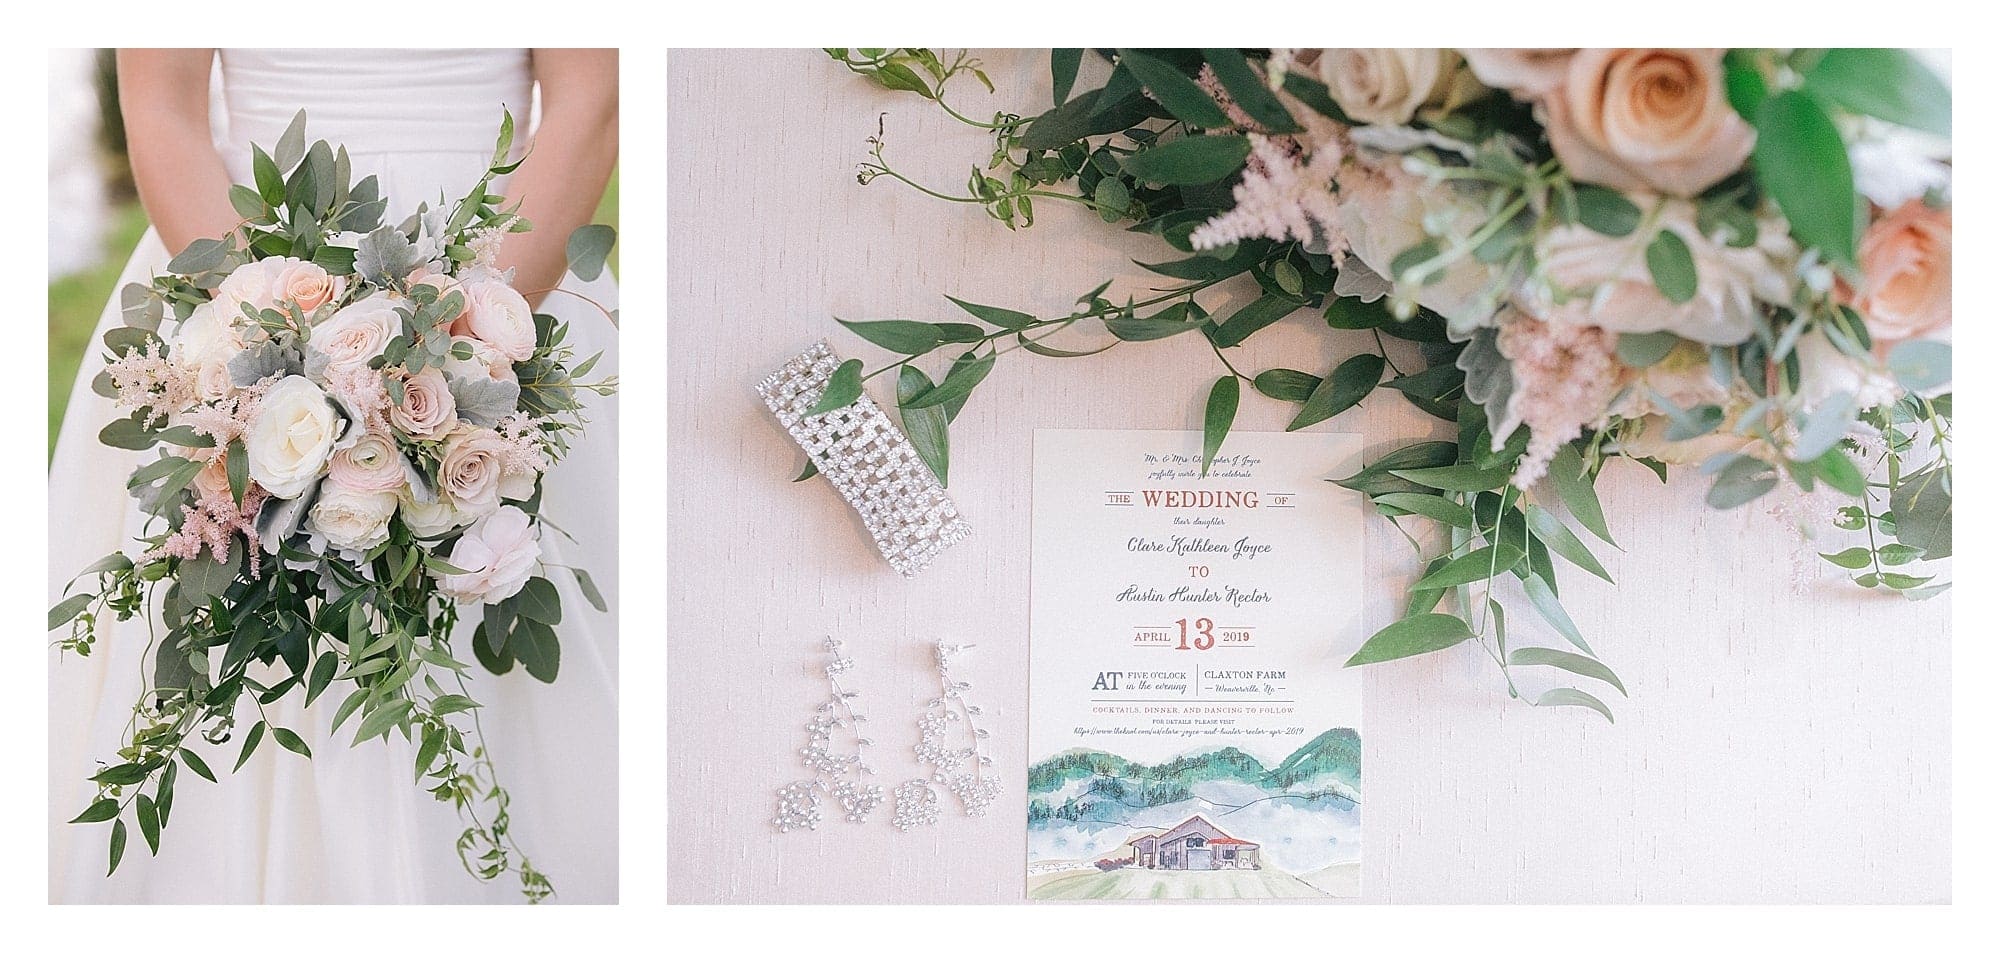 Cream and peach wedding bouquet and watercolor wedding invitation